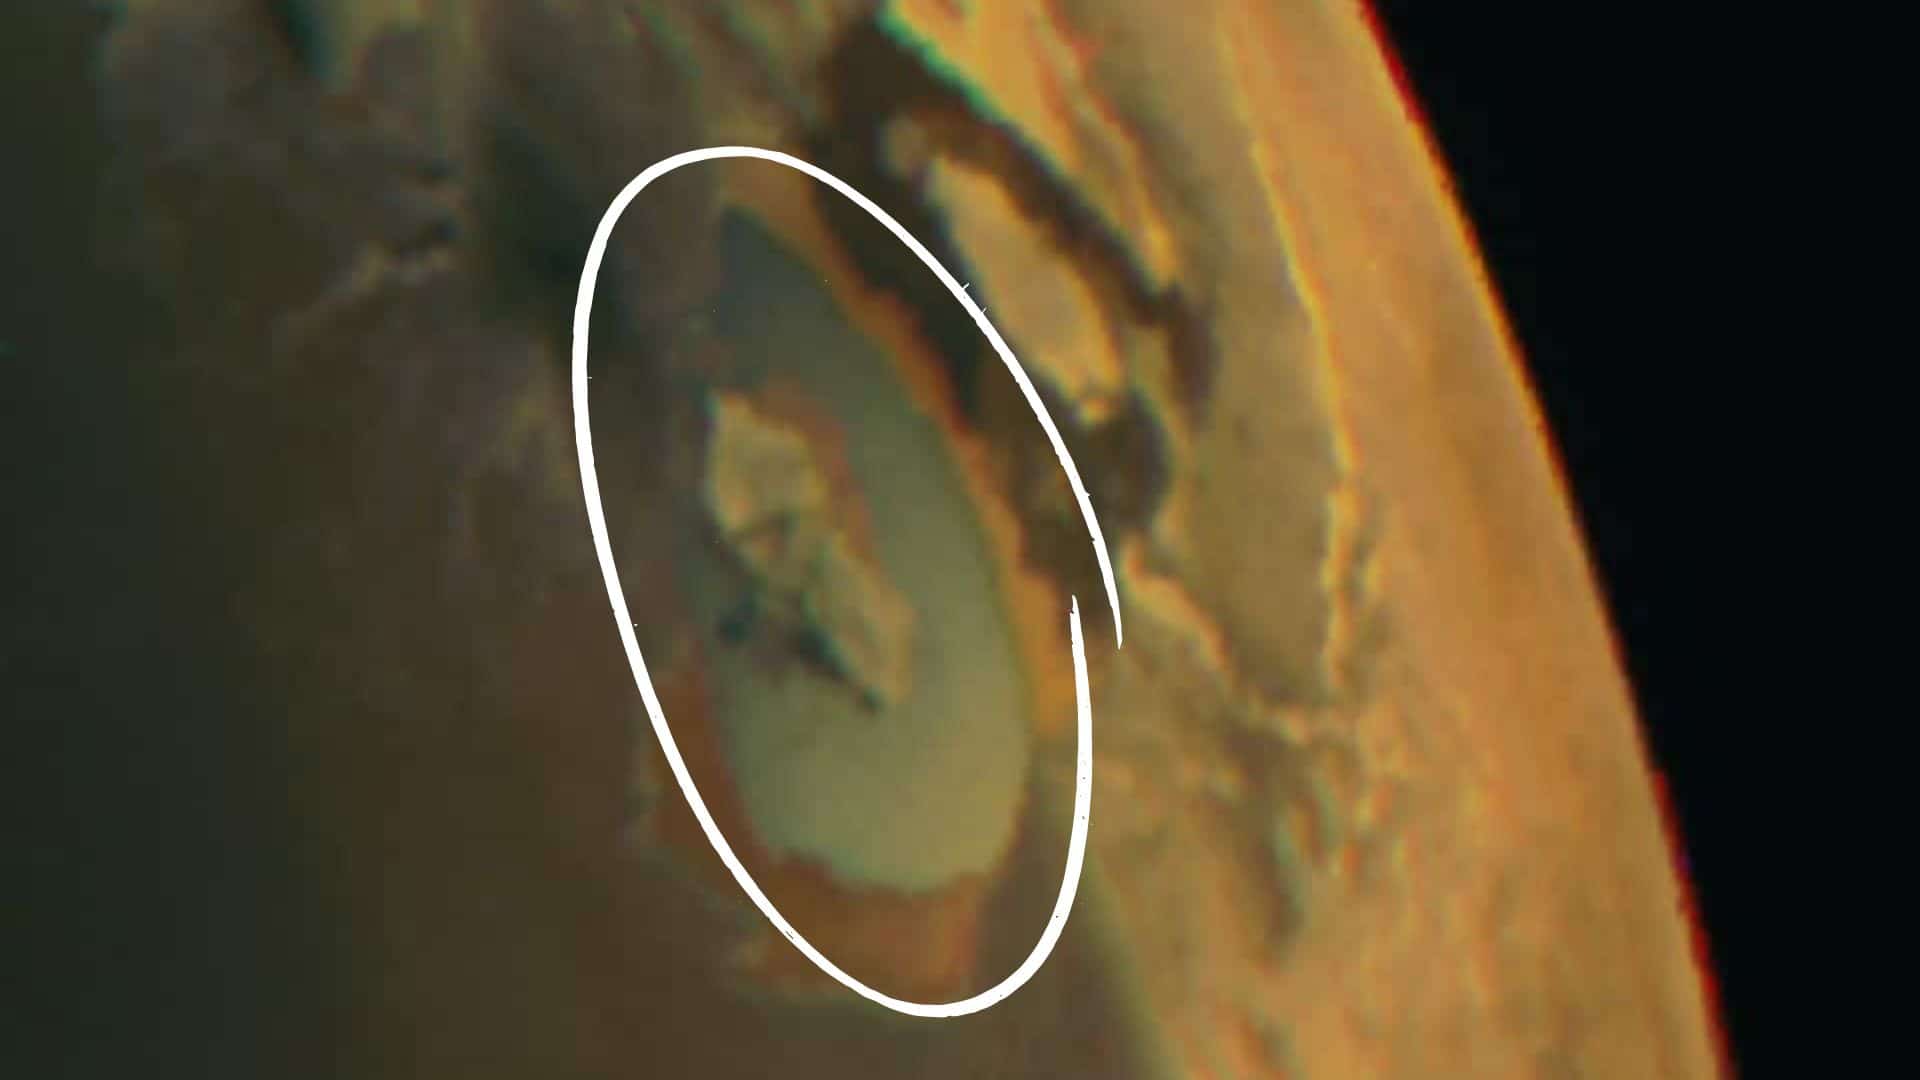 Juno captured Jupiter's moon Io with its largest volcanically active lava lake, Loki